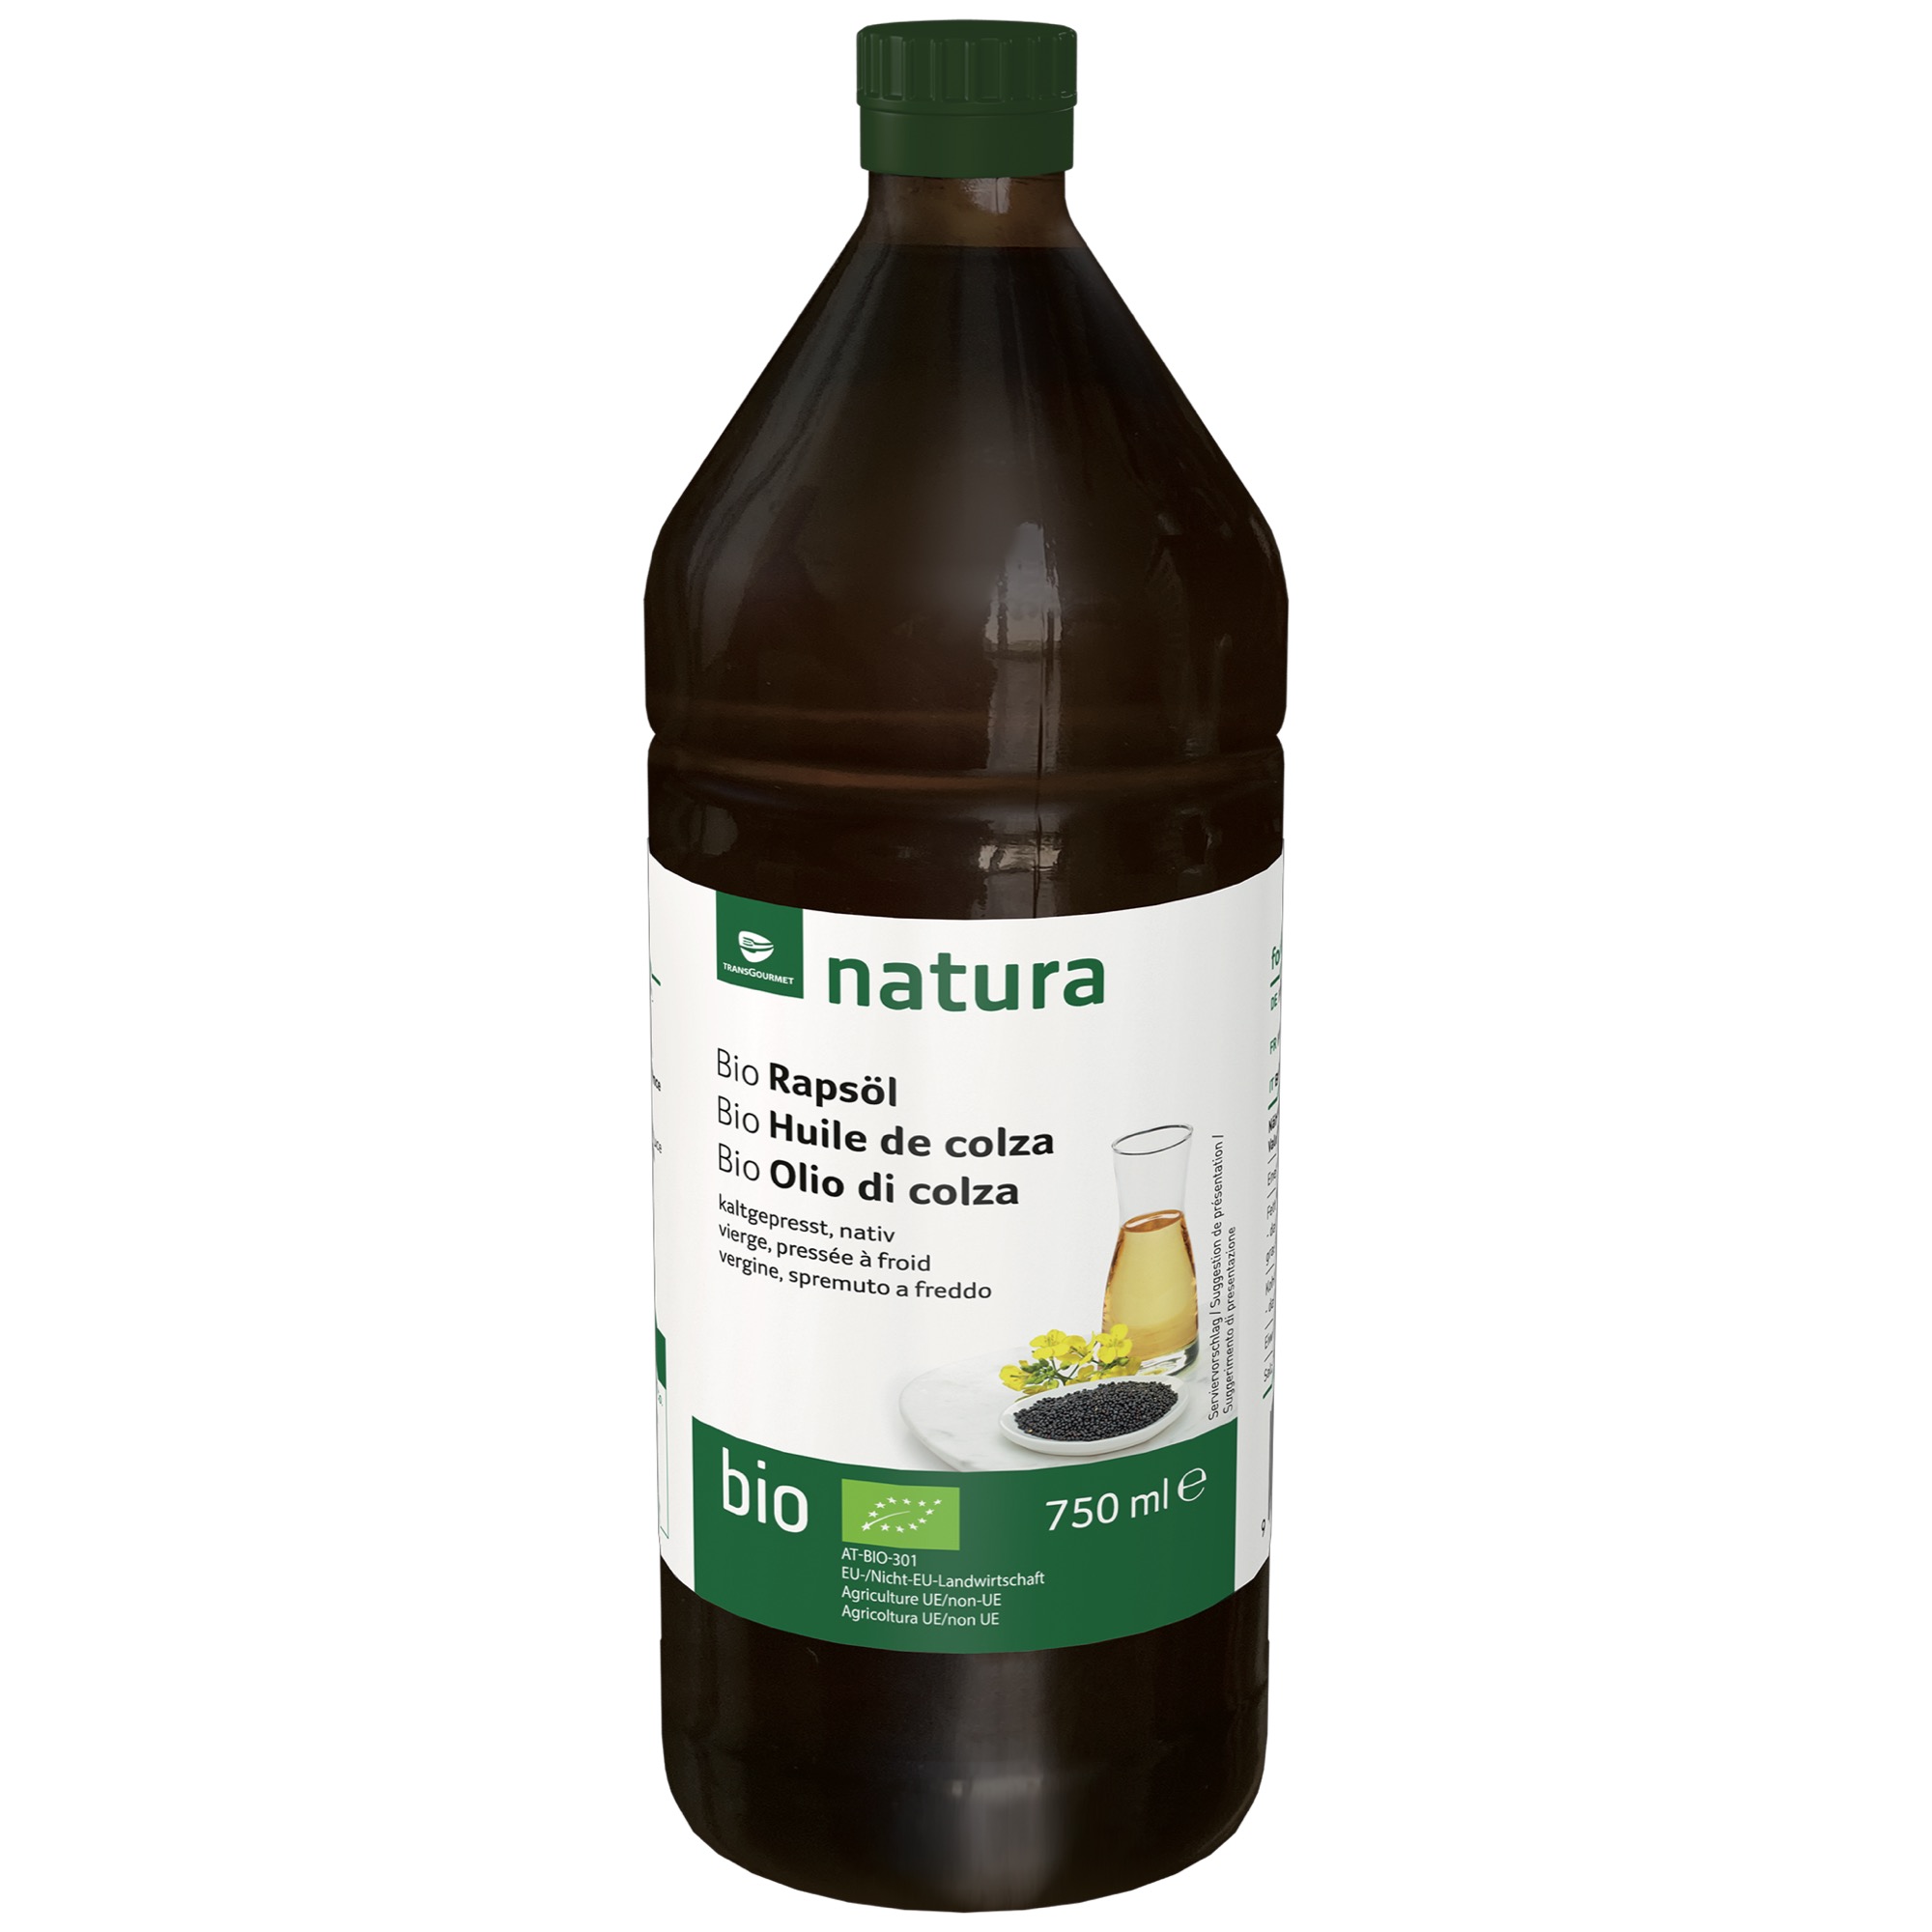 Natura Bio repkový olej za studena 750ml